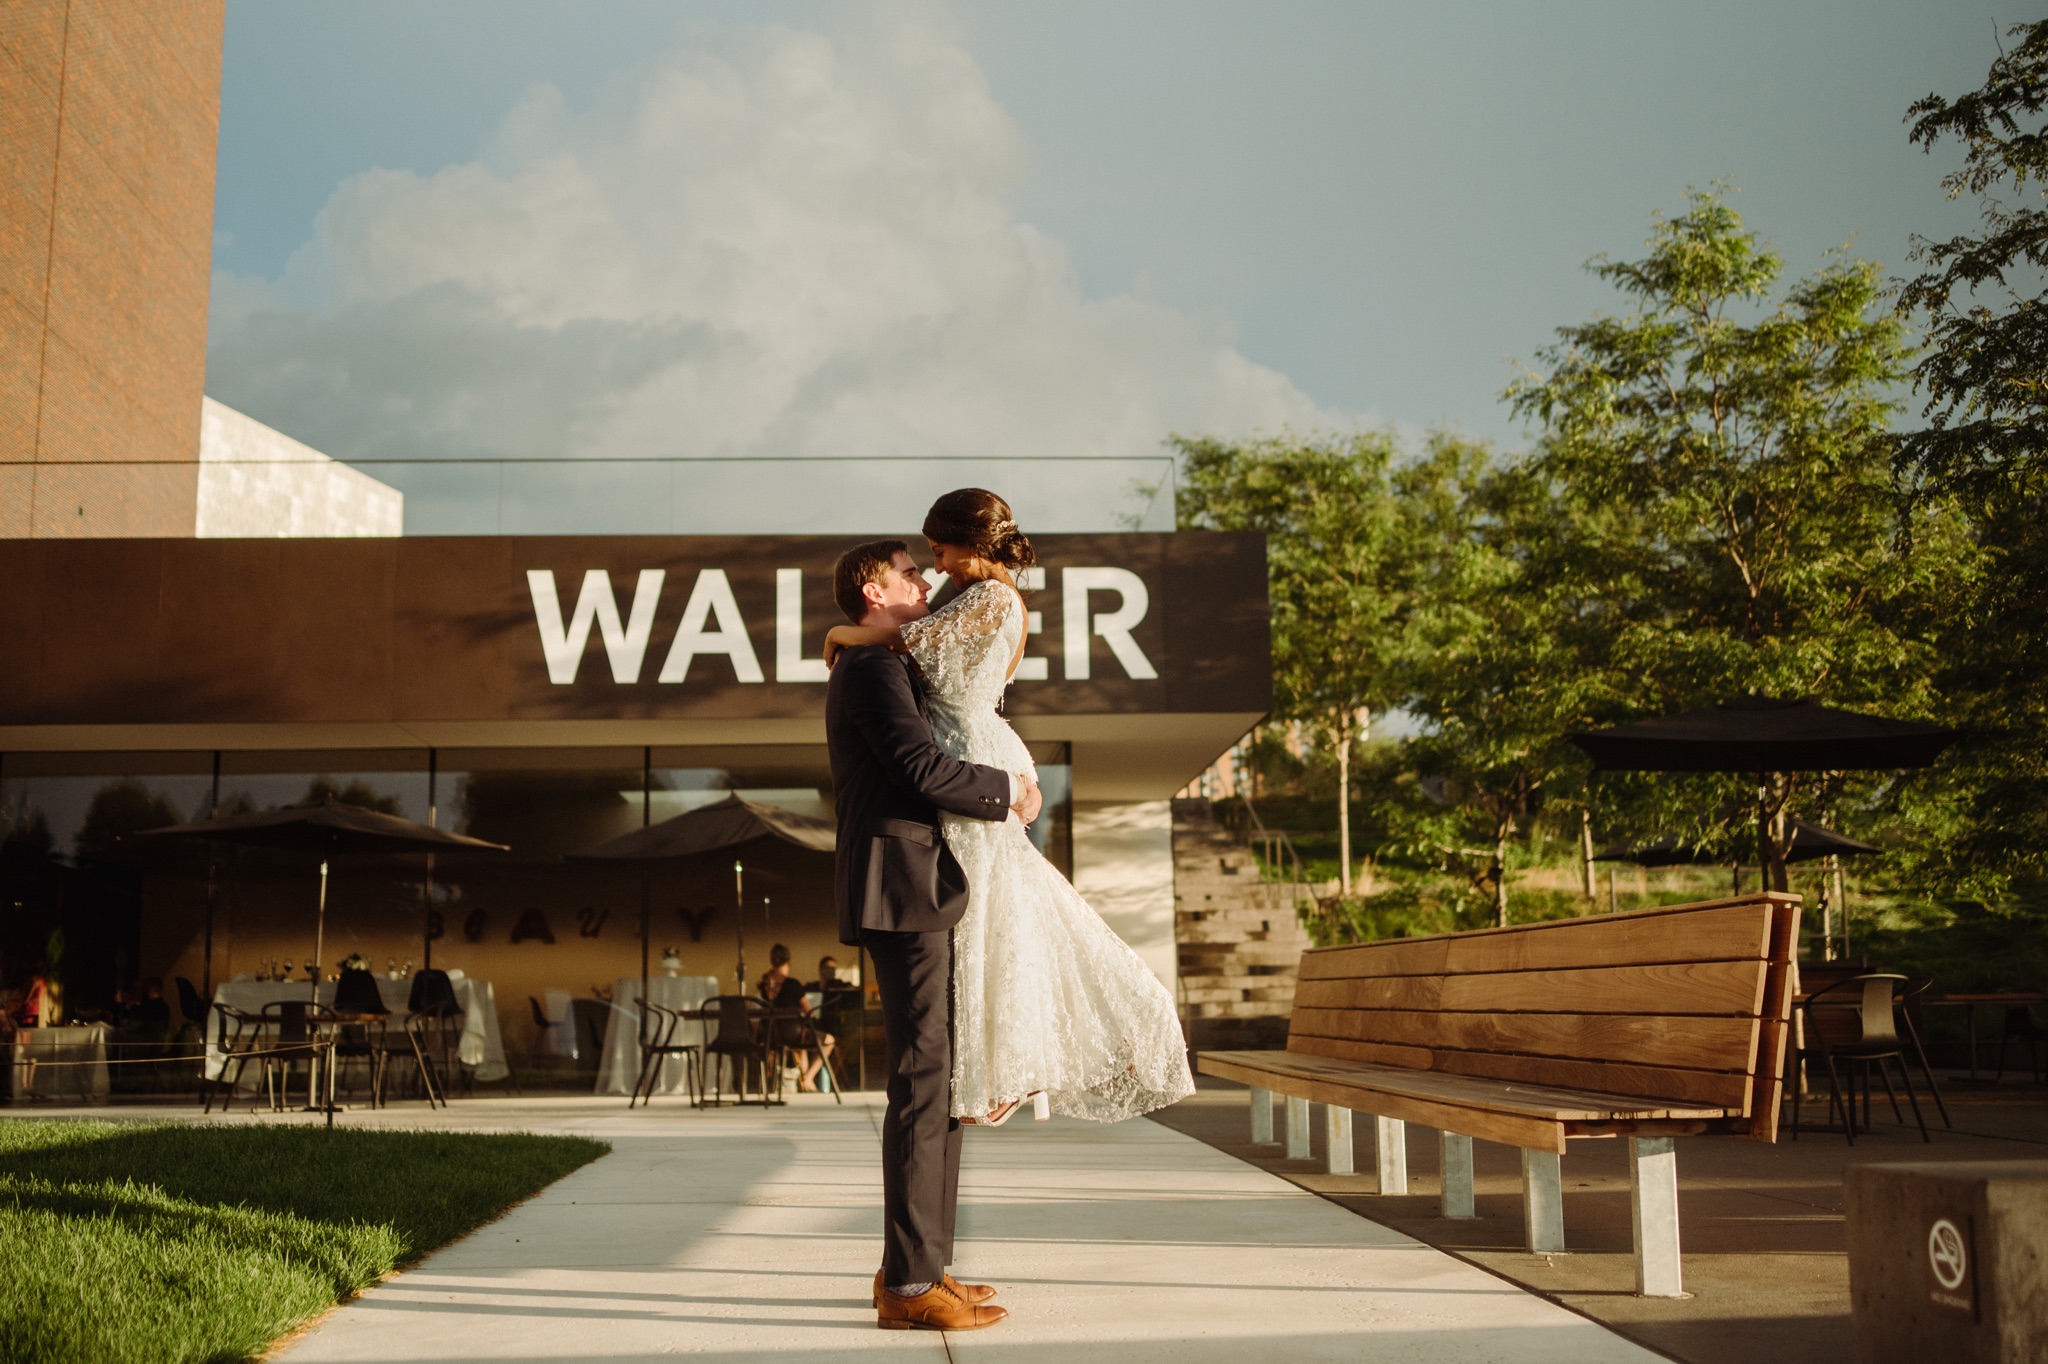 Groom holding up bride and kissing outside on sidewalk walker art center wedding